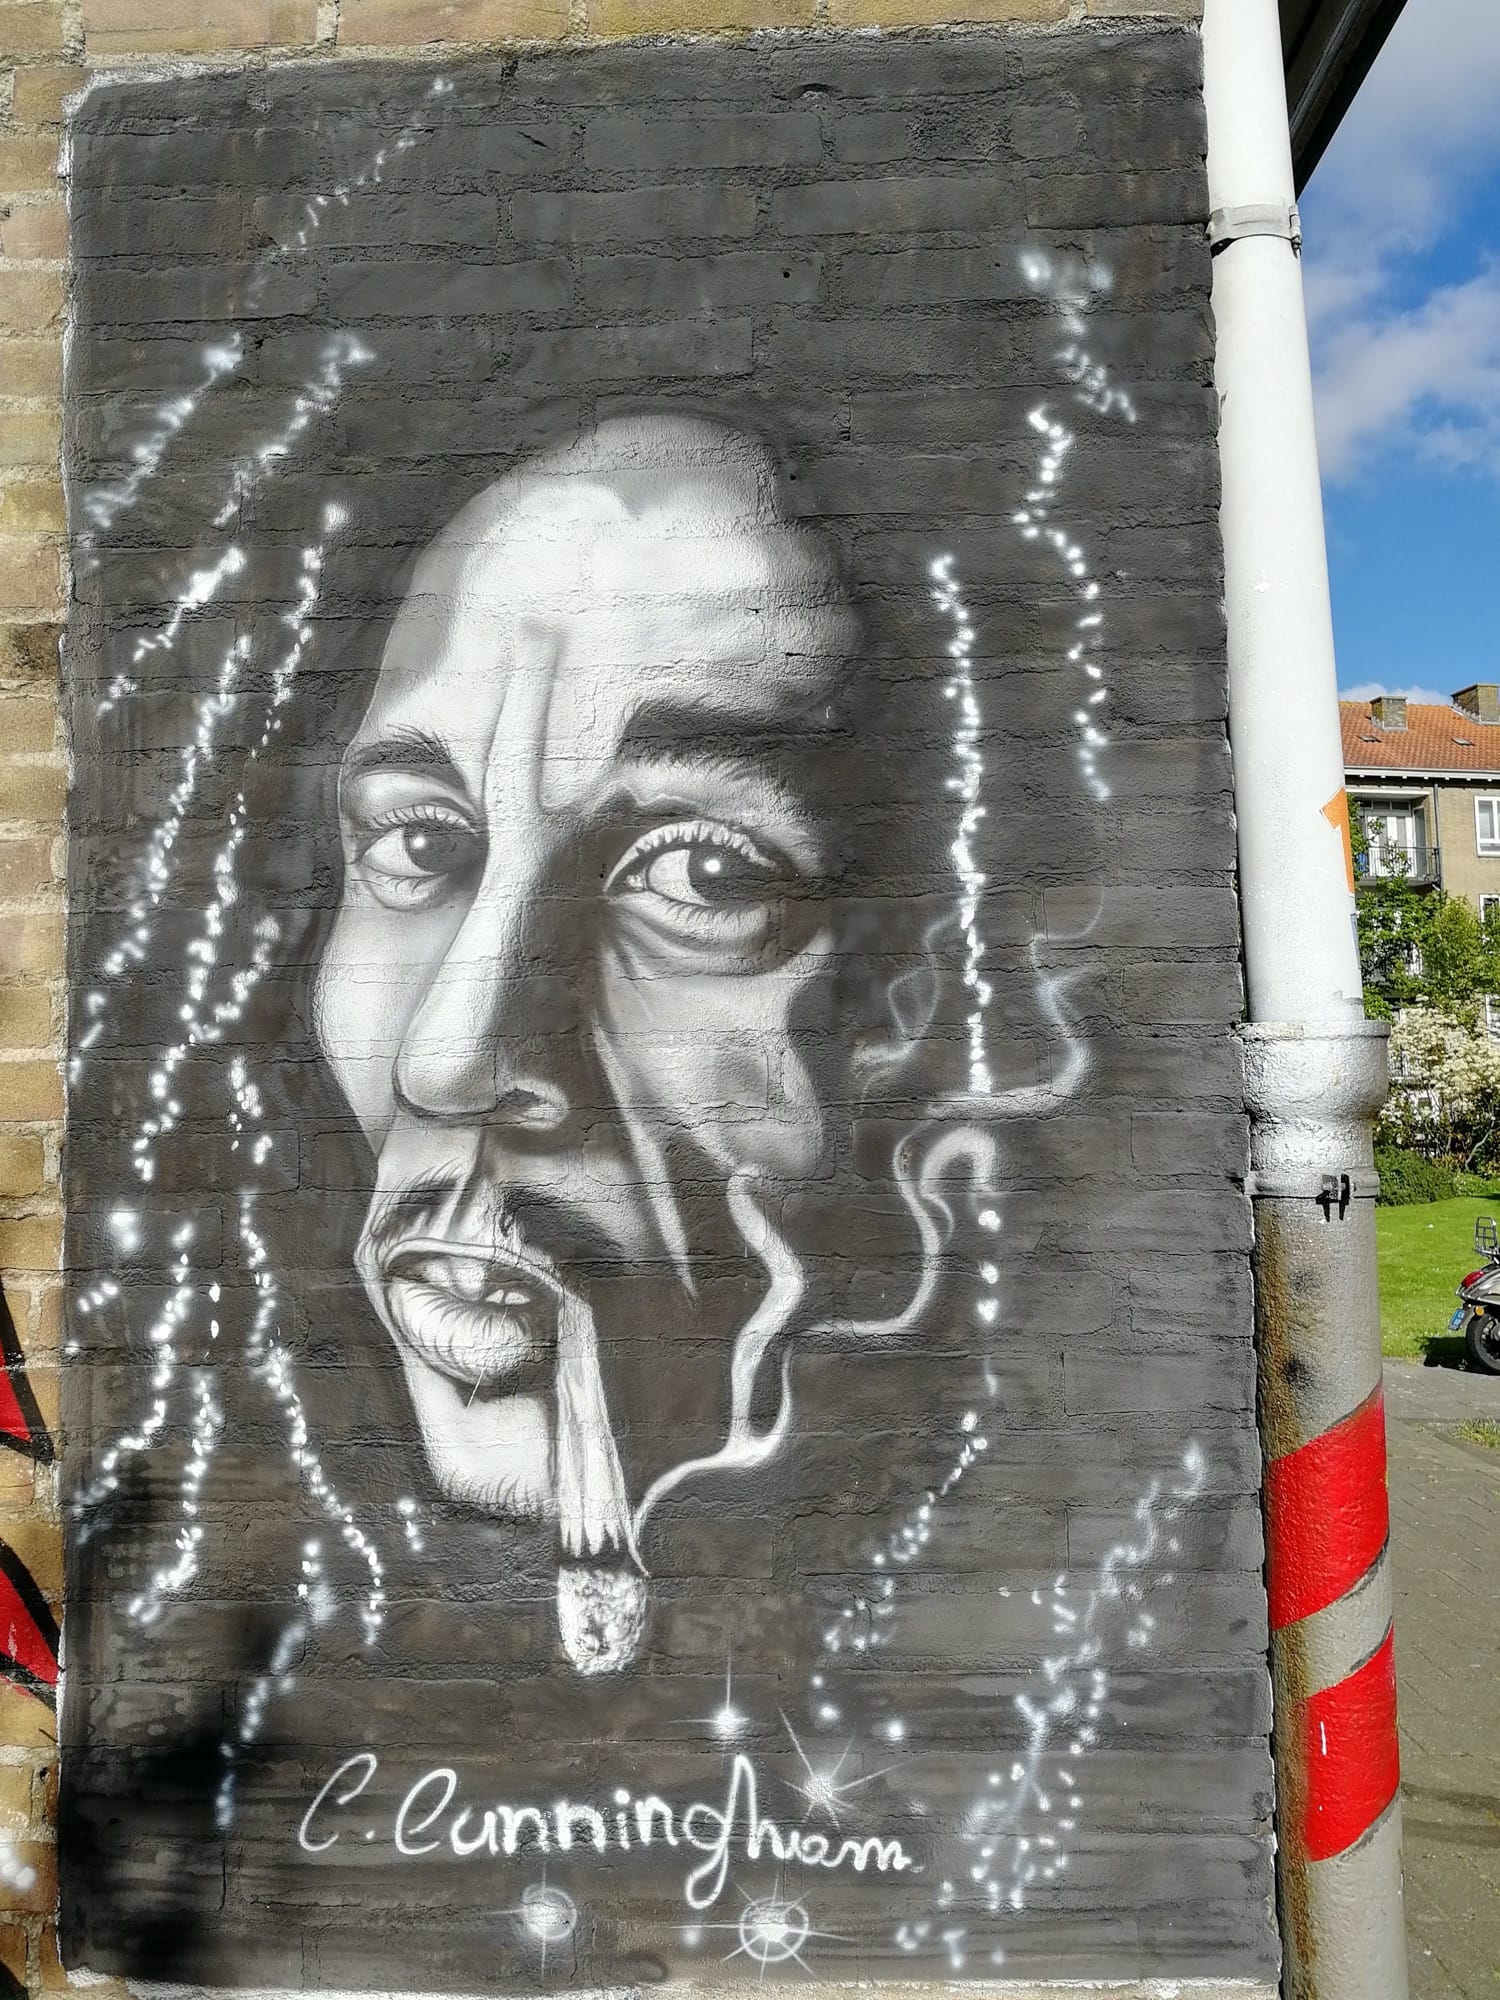 Graffiti 1759 Bob Marley captured by Rabot in Amsterdam Netherlands